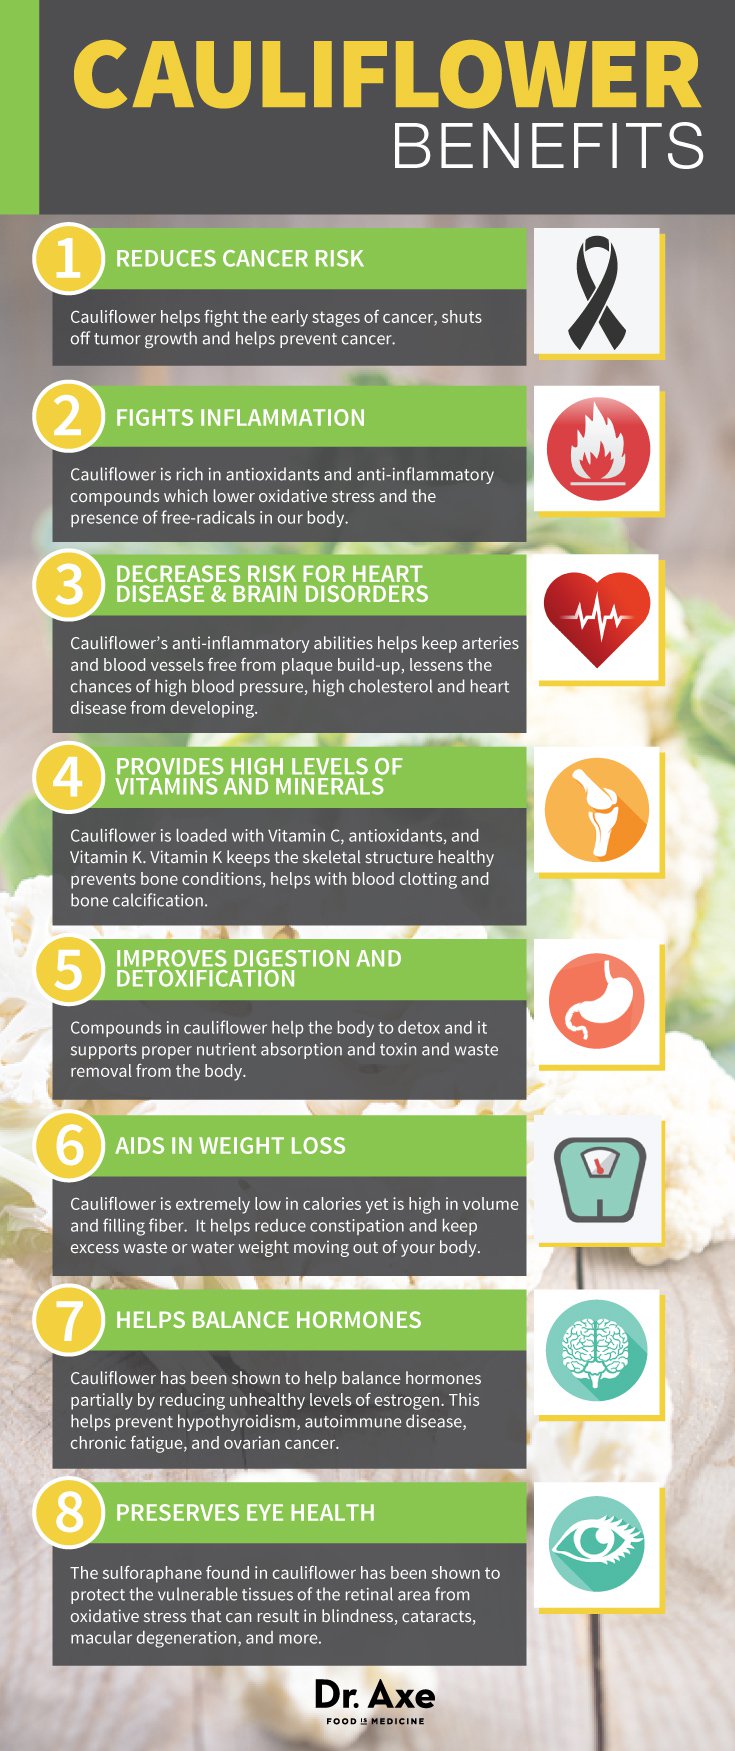 CauliflowerHealth-Benefits